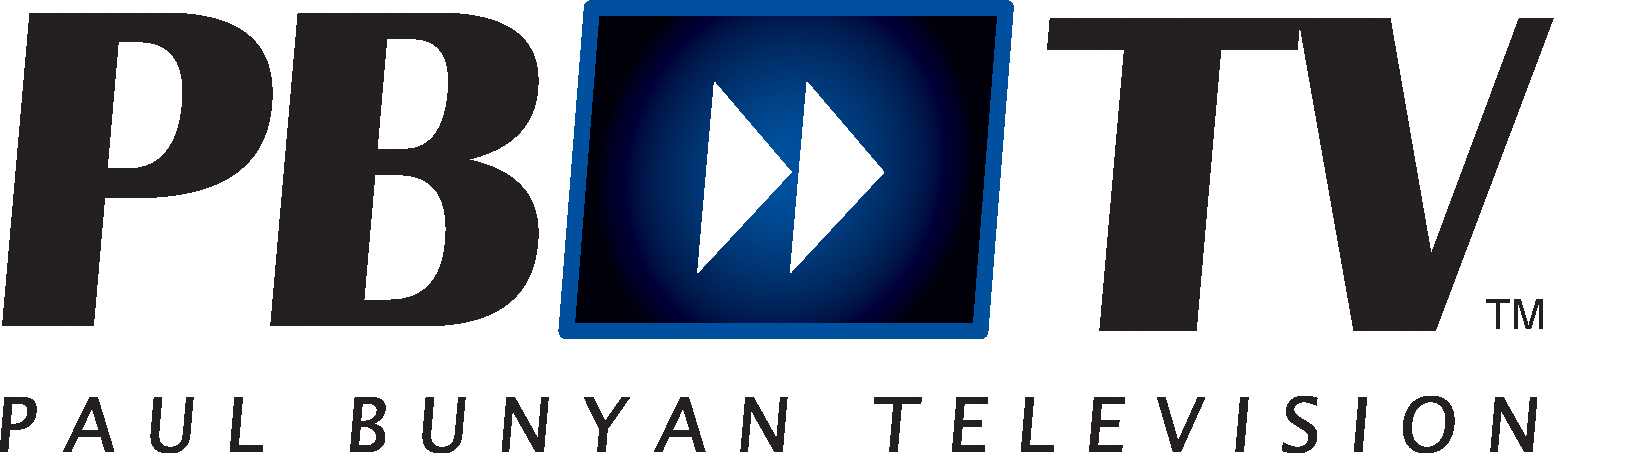 Bunyan TV Broadcasting logo